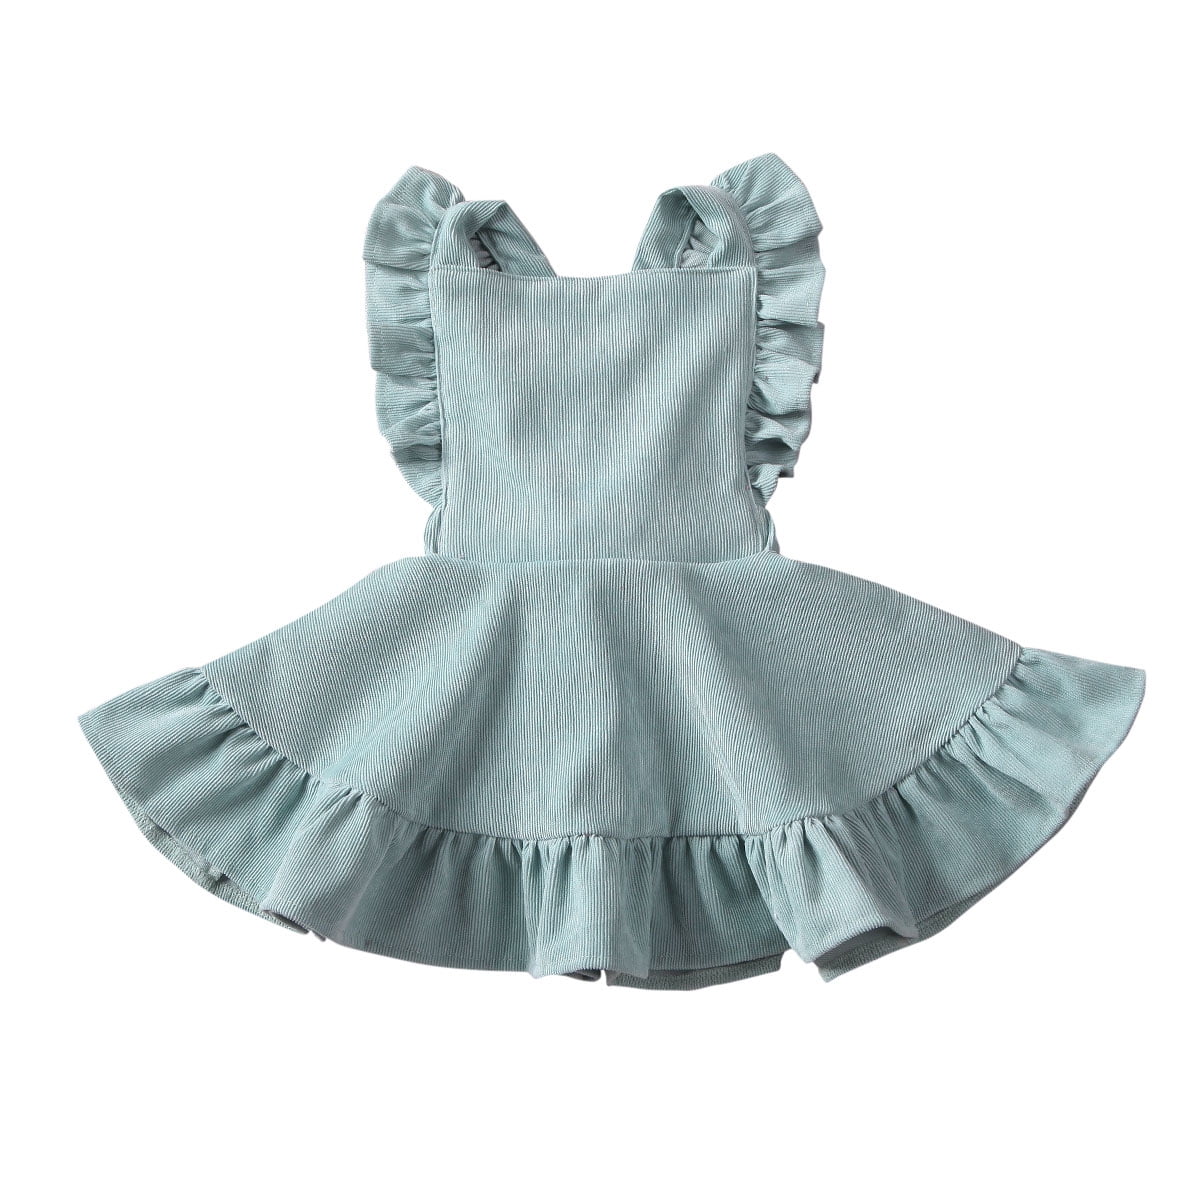 luethbiezx Kids Baby Girl Toddler Clothes Ruffle Skirt Backless Party Dress